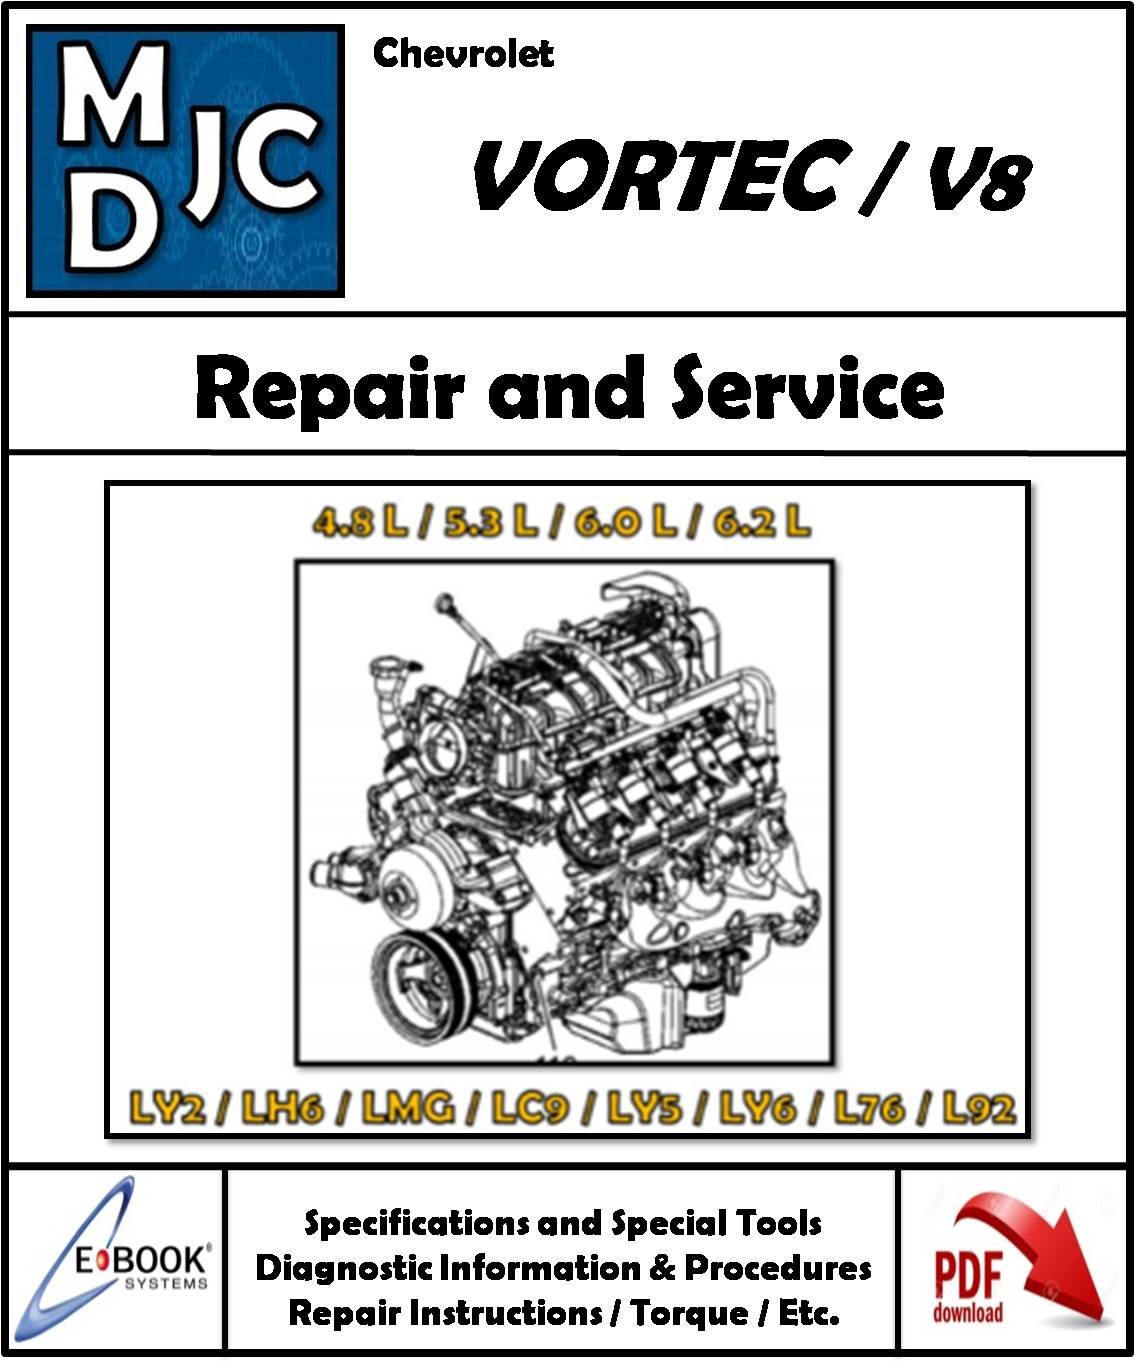 Chevrolet - GM / Motores Vortec V8